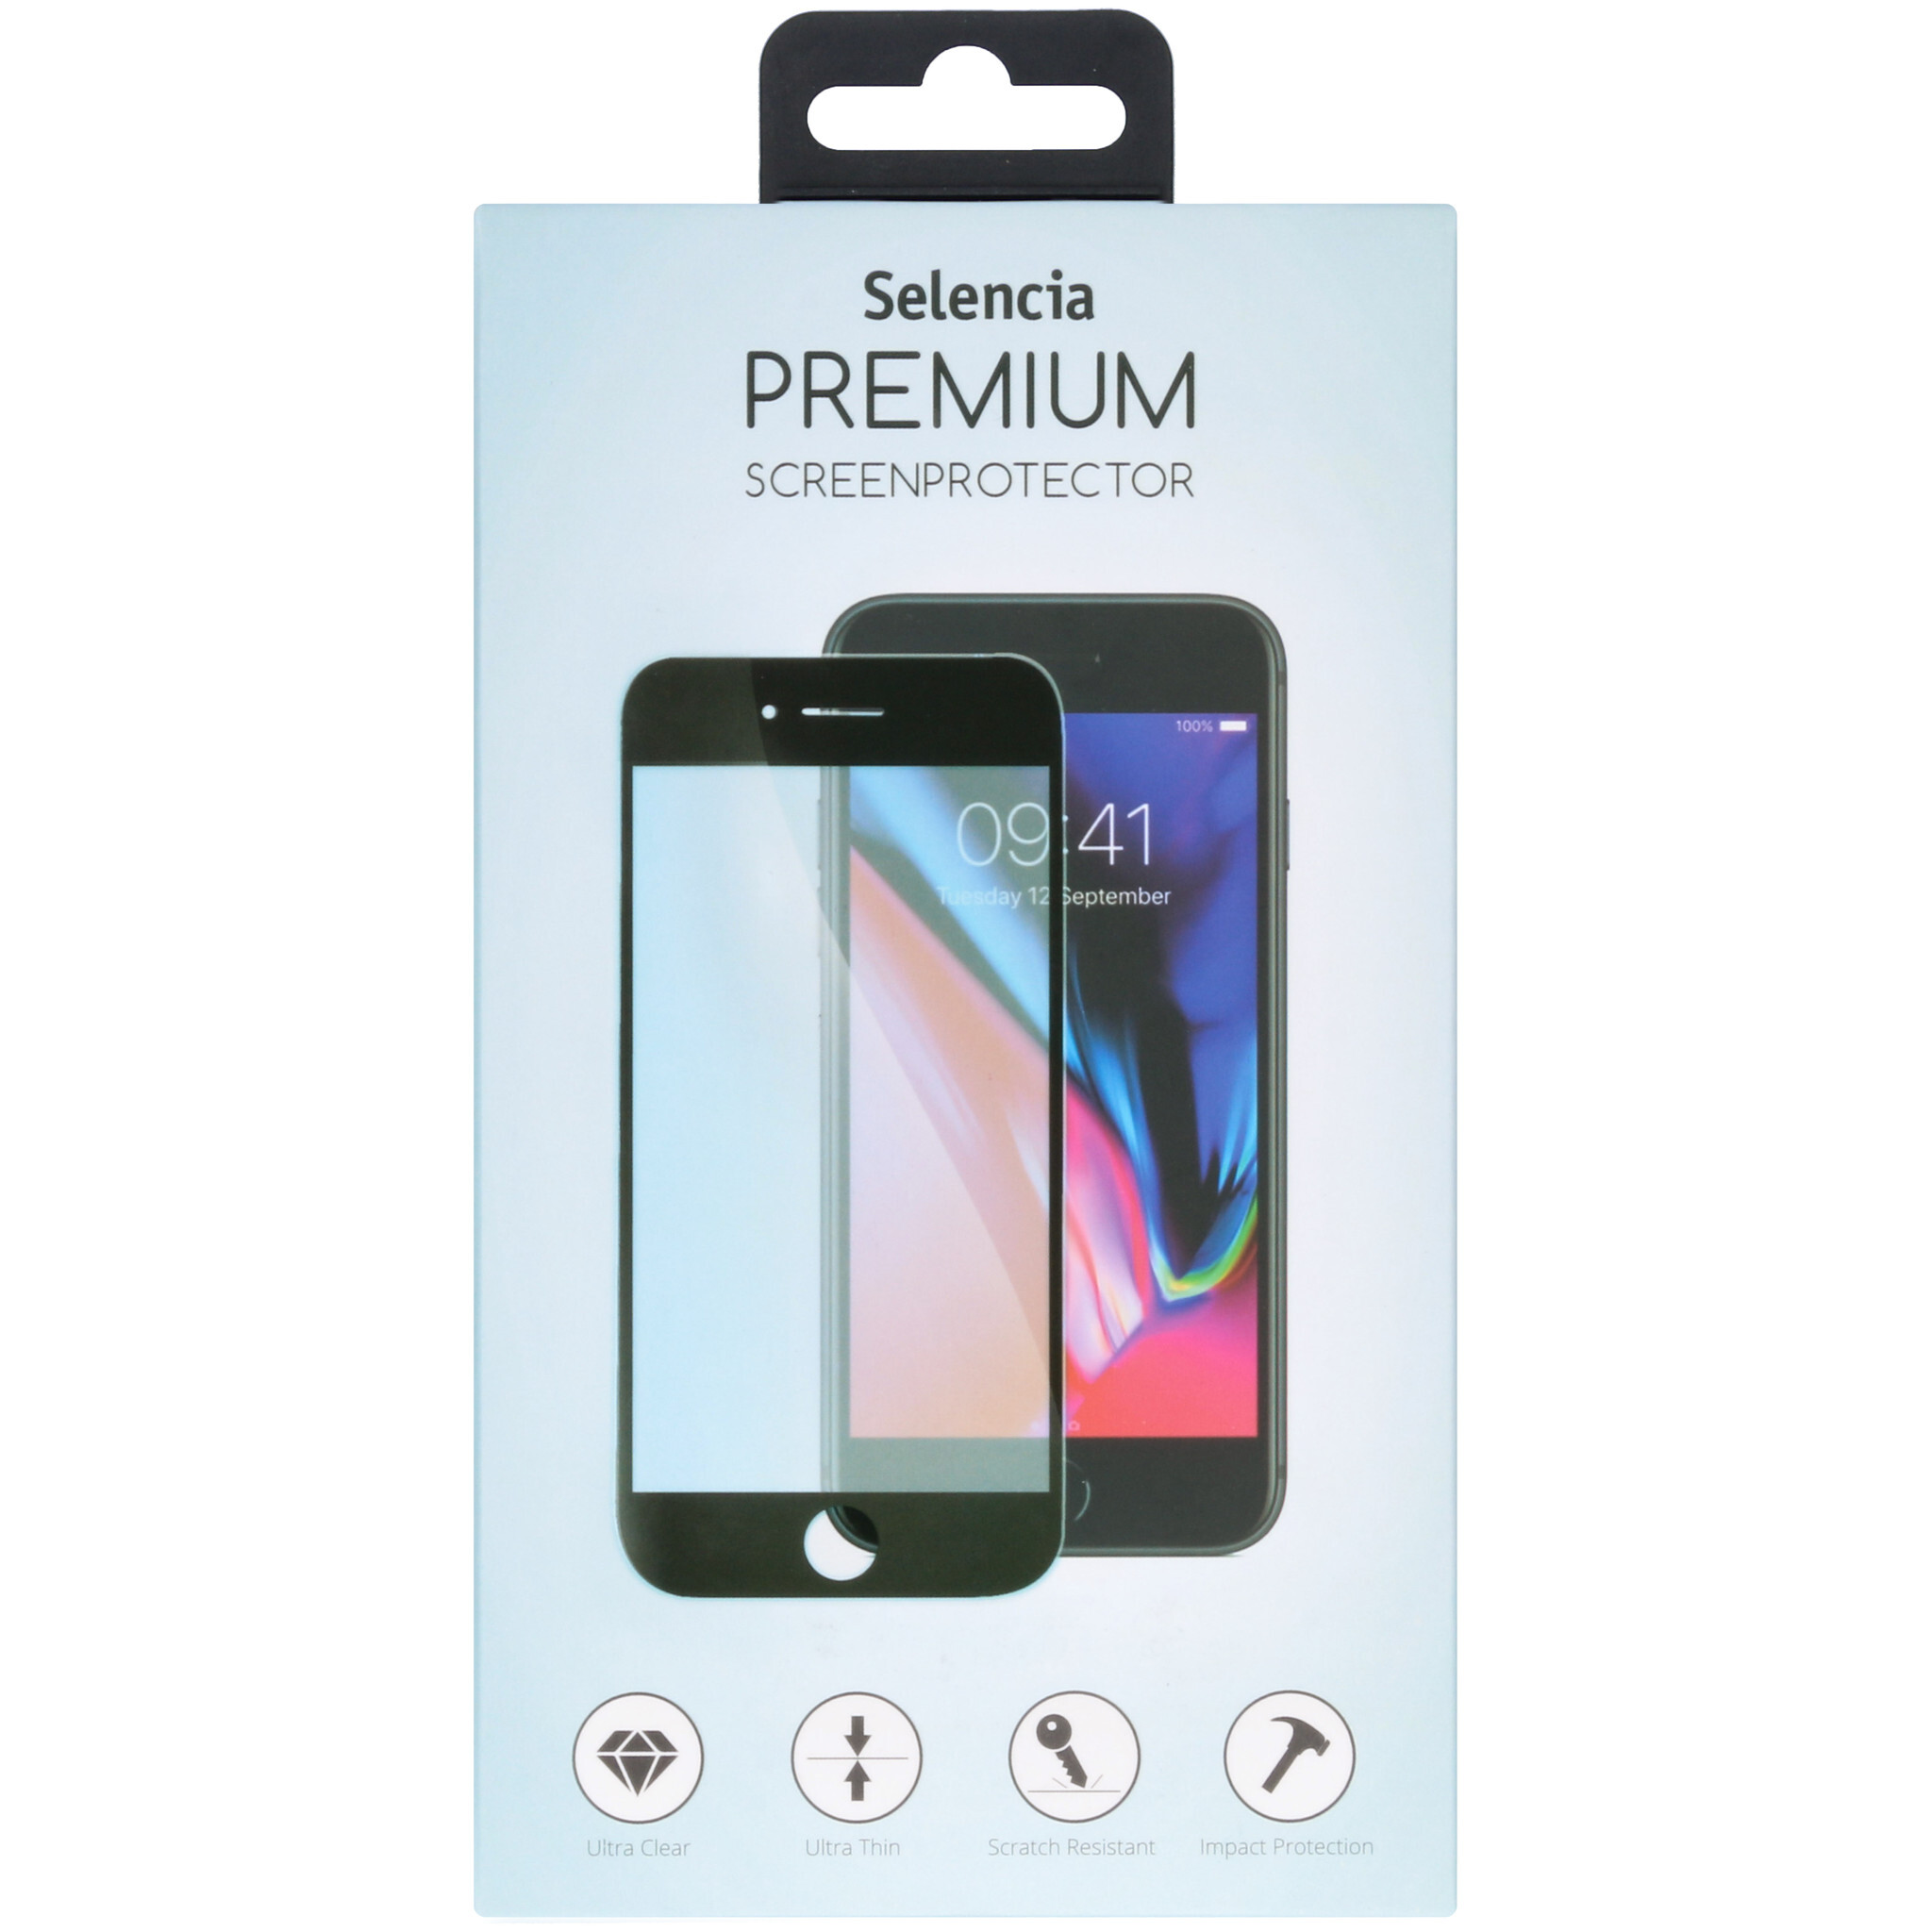 Selencia Glas Premium Screenprotector voor de Oppo A5 2020 / A9 2020